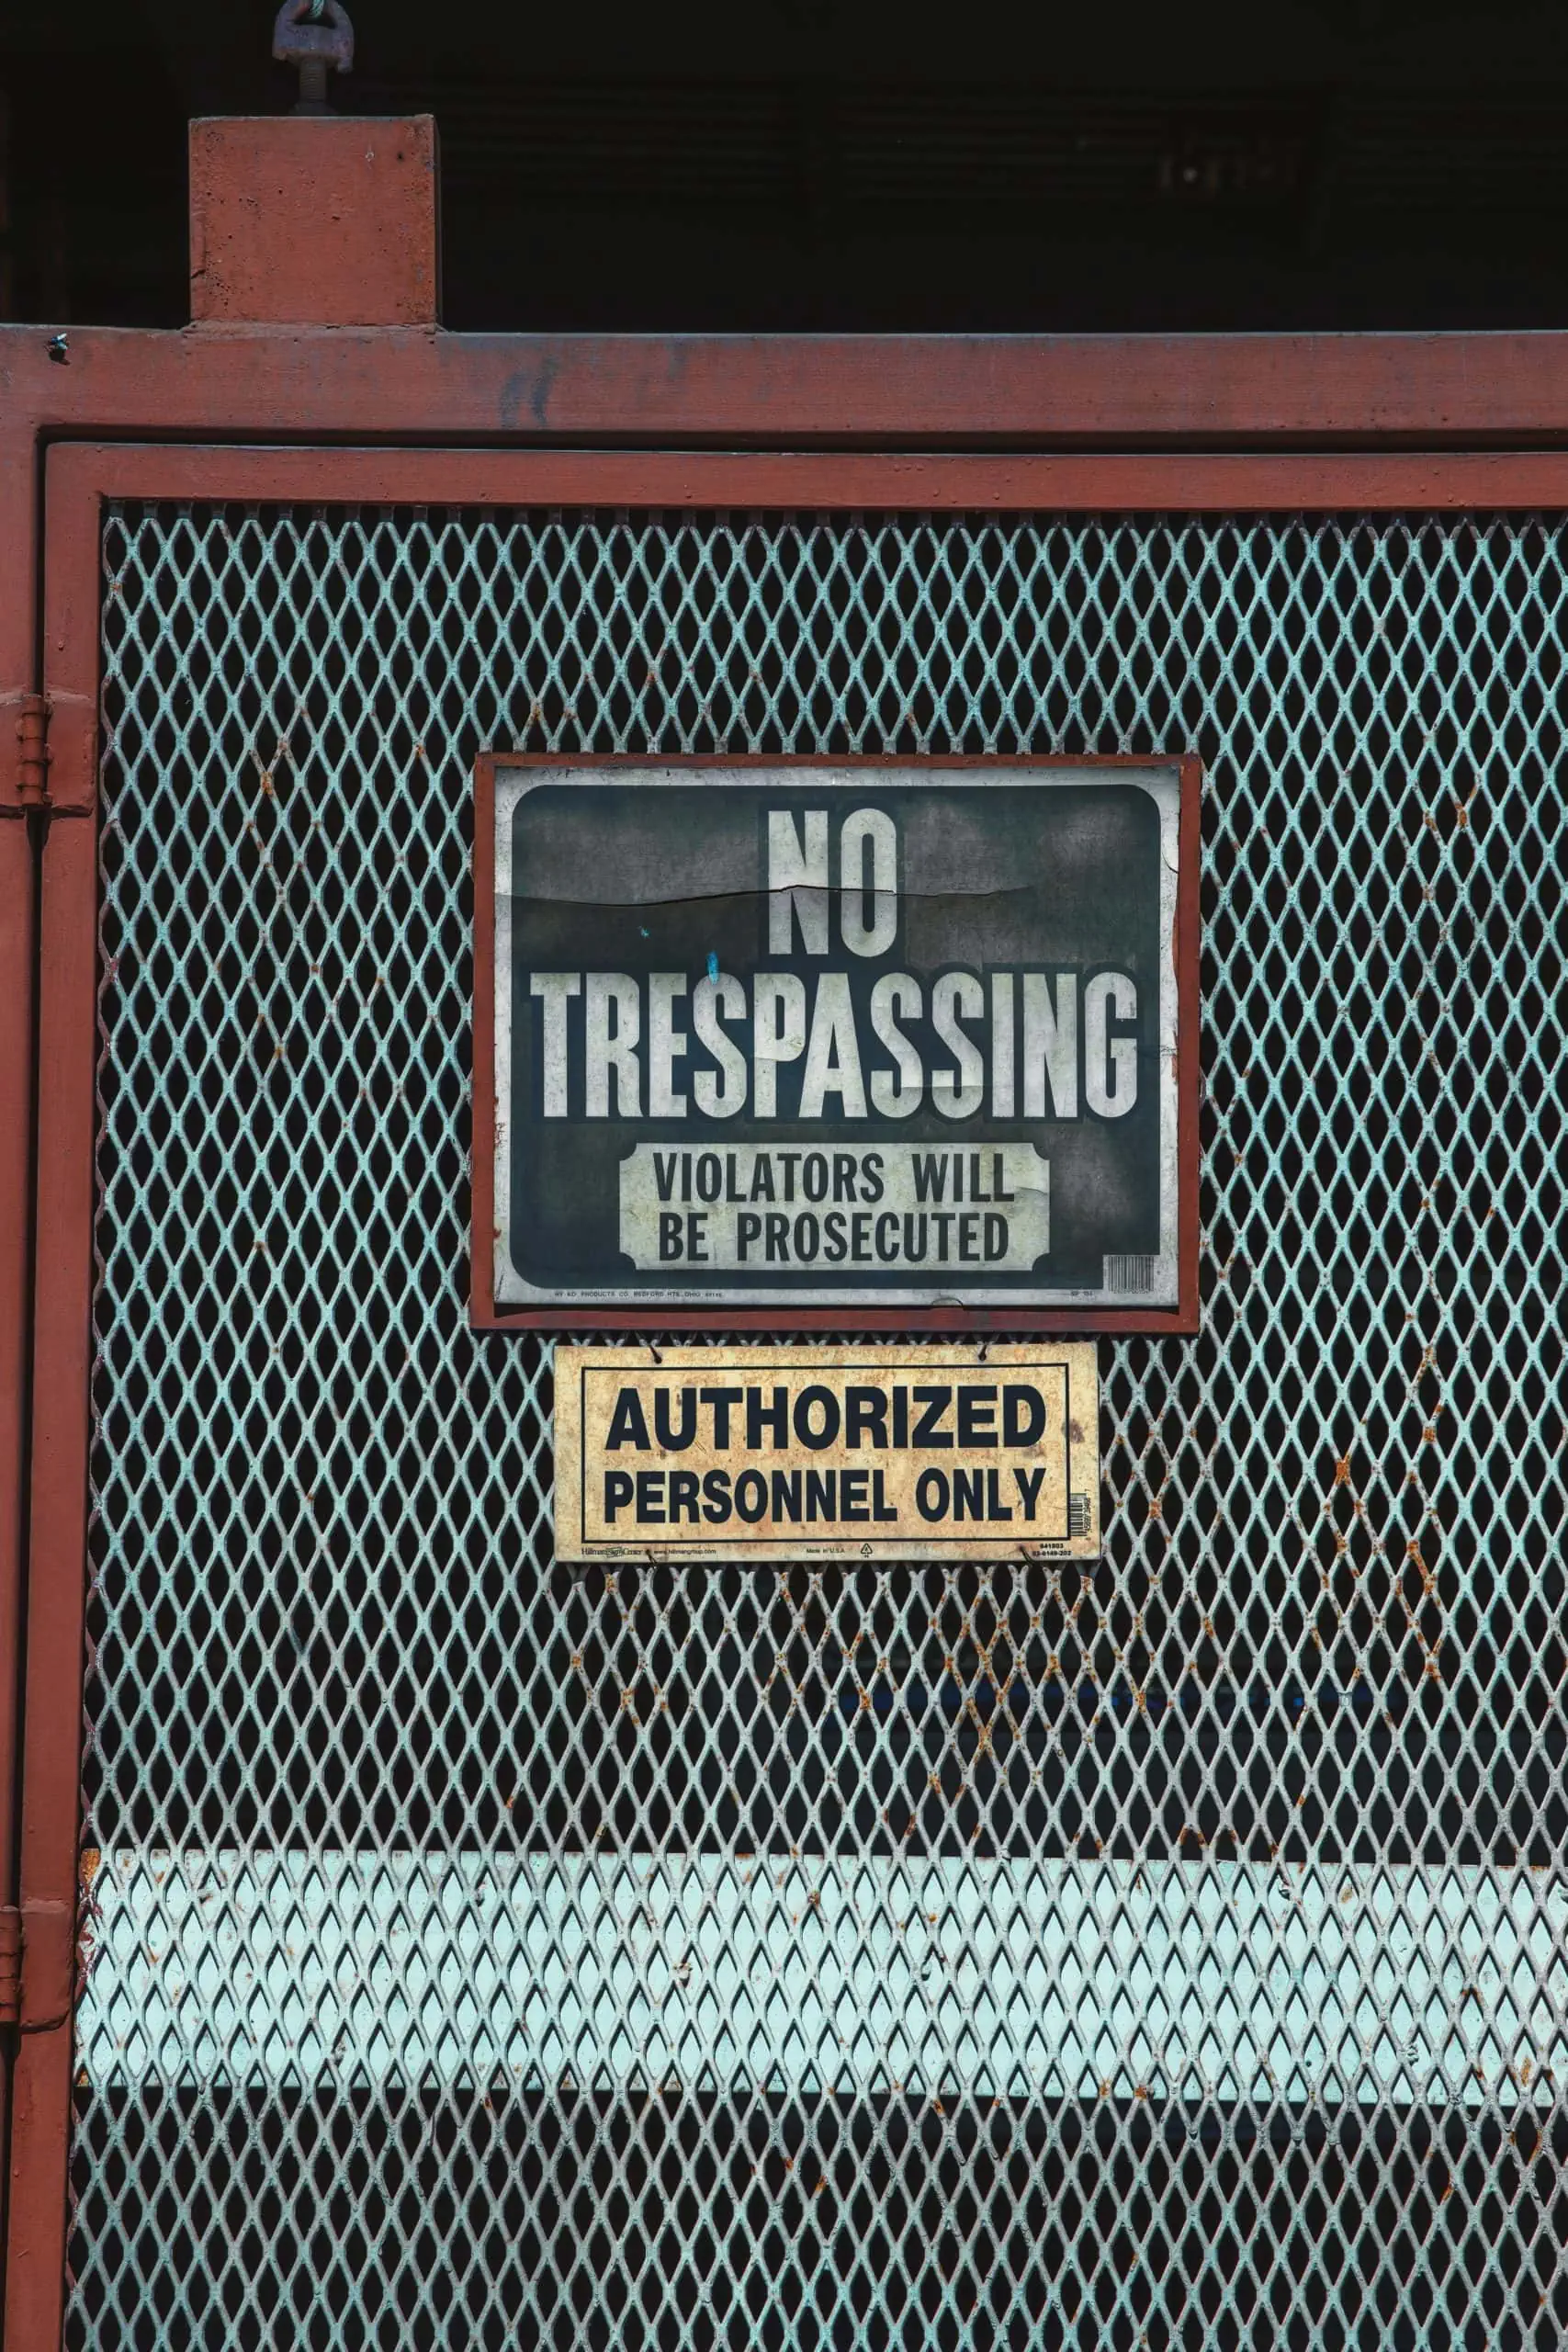 No trespassing sign on building that has Verkada long range surveillance camera